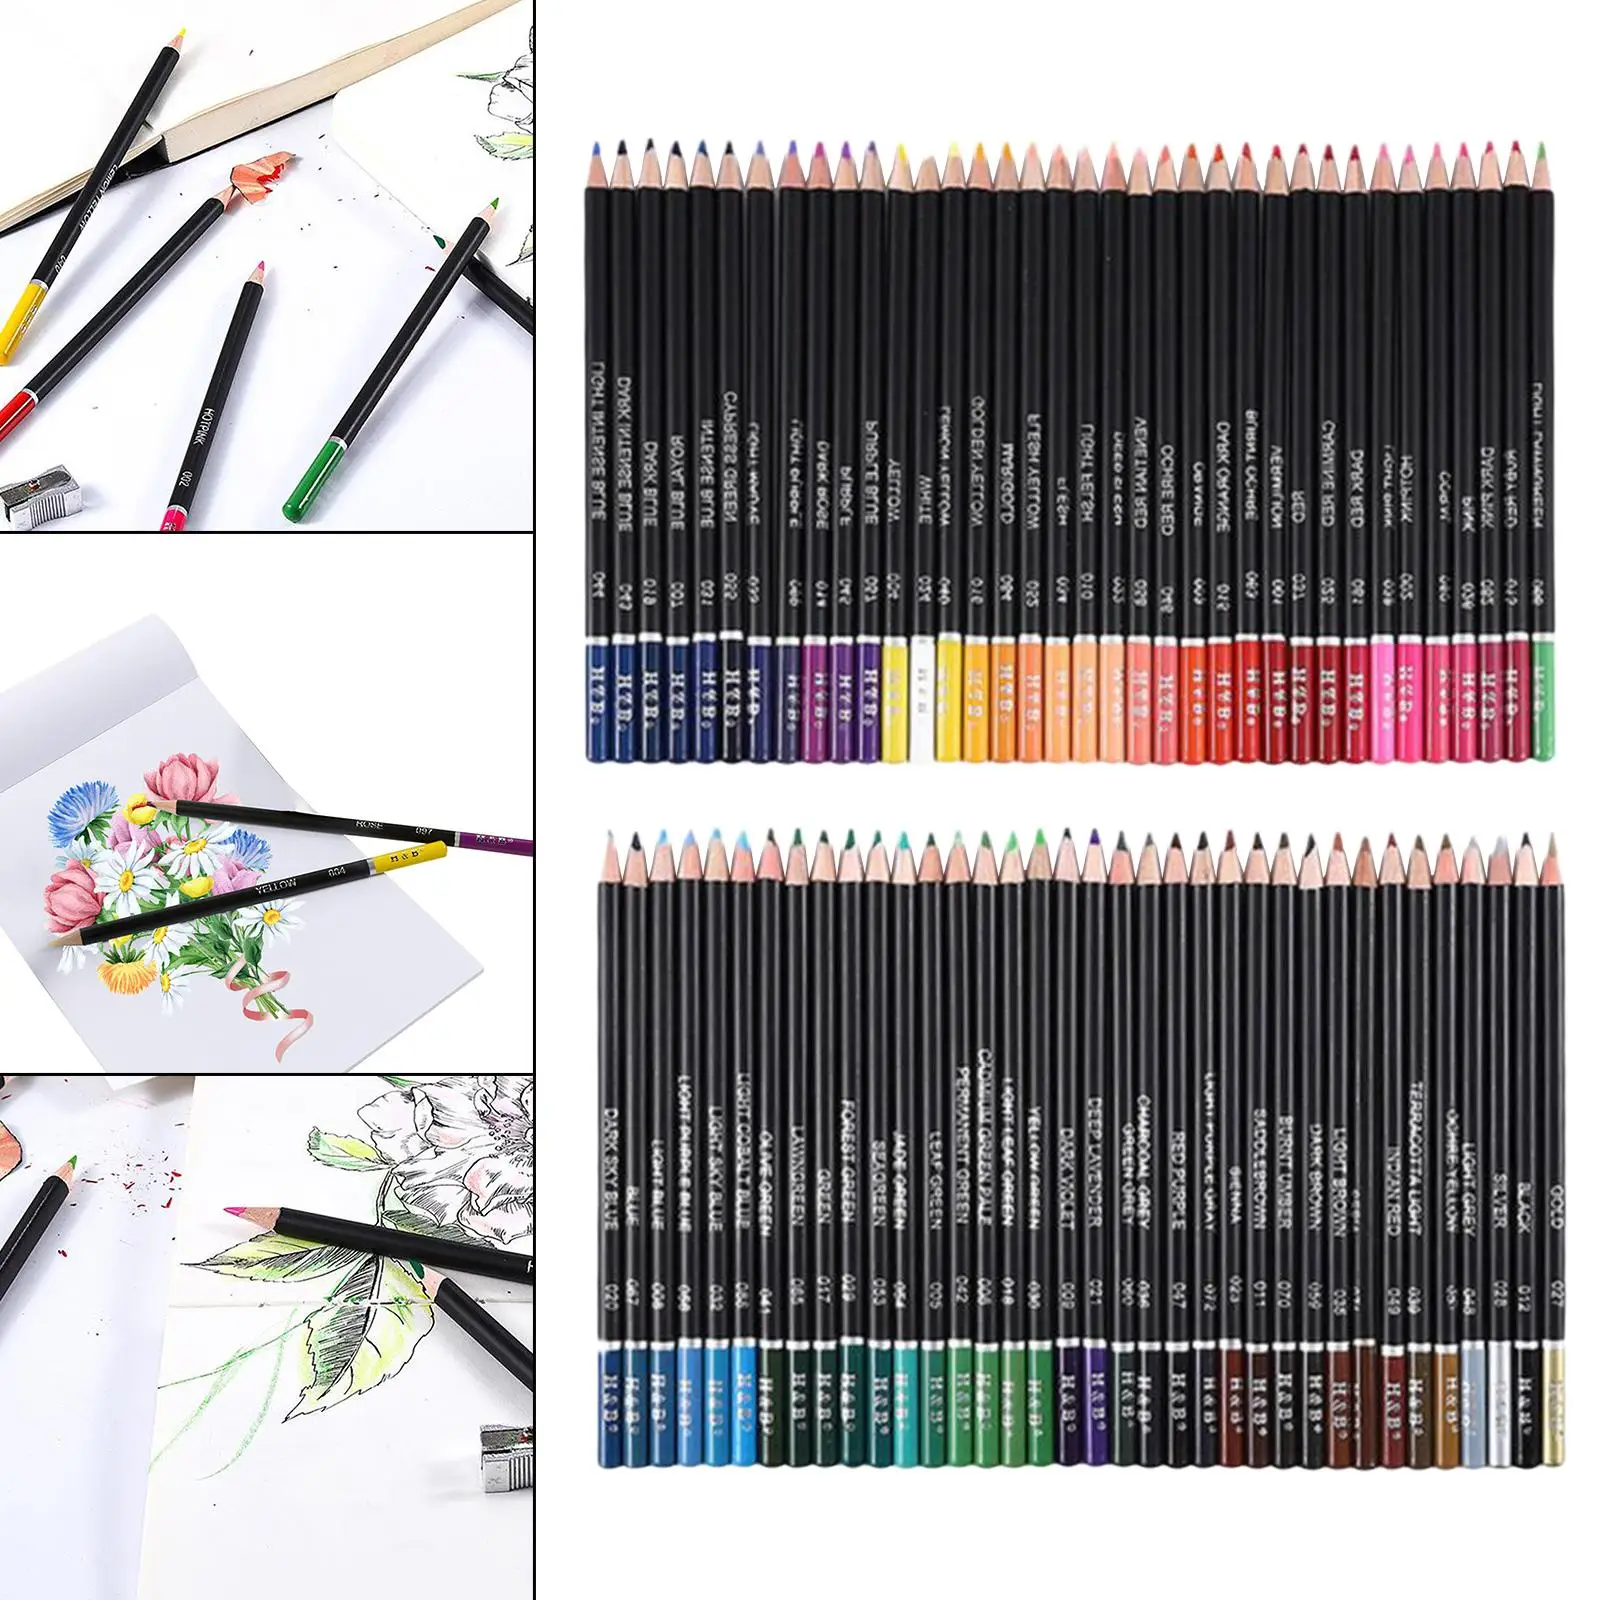 72 Oil Based Colored Pencils Crafting Sketch Sketching Sketchbook